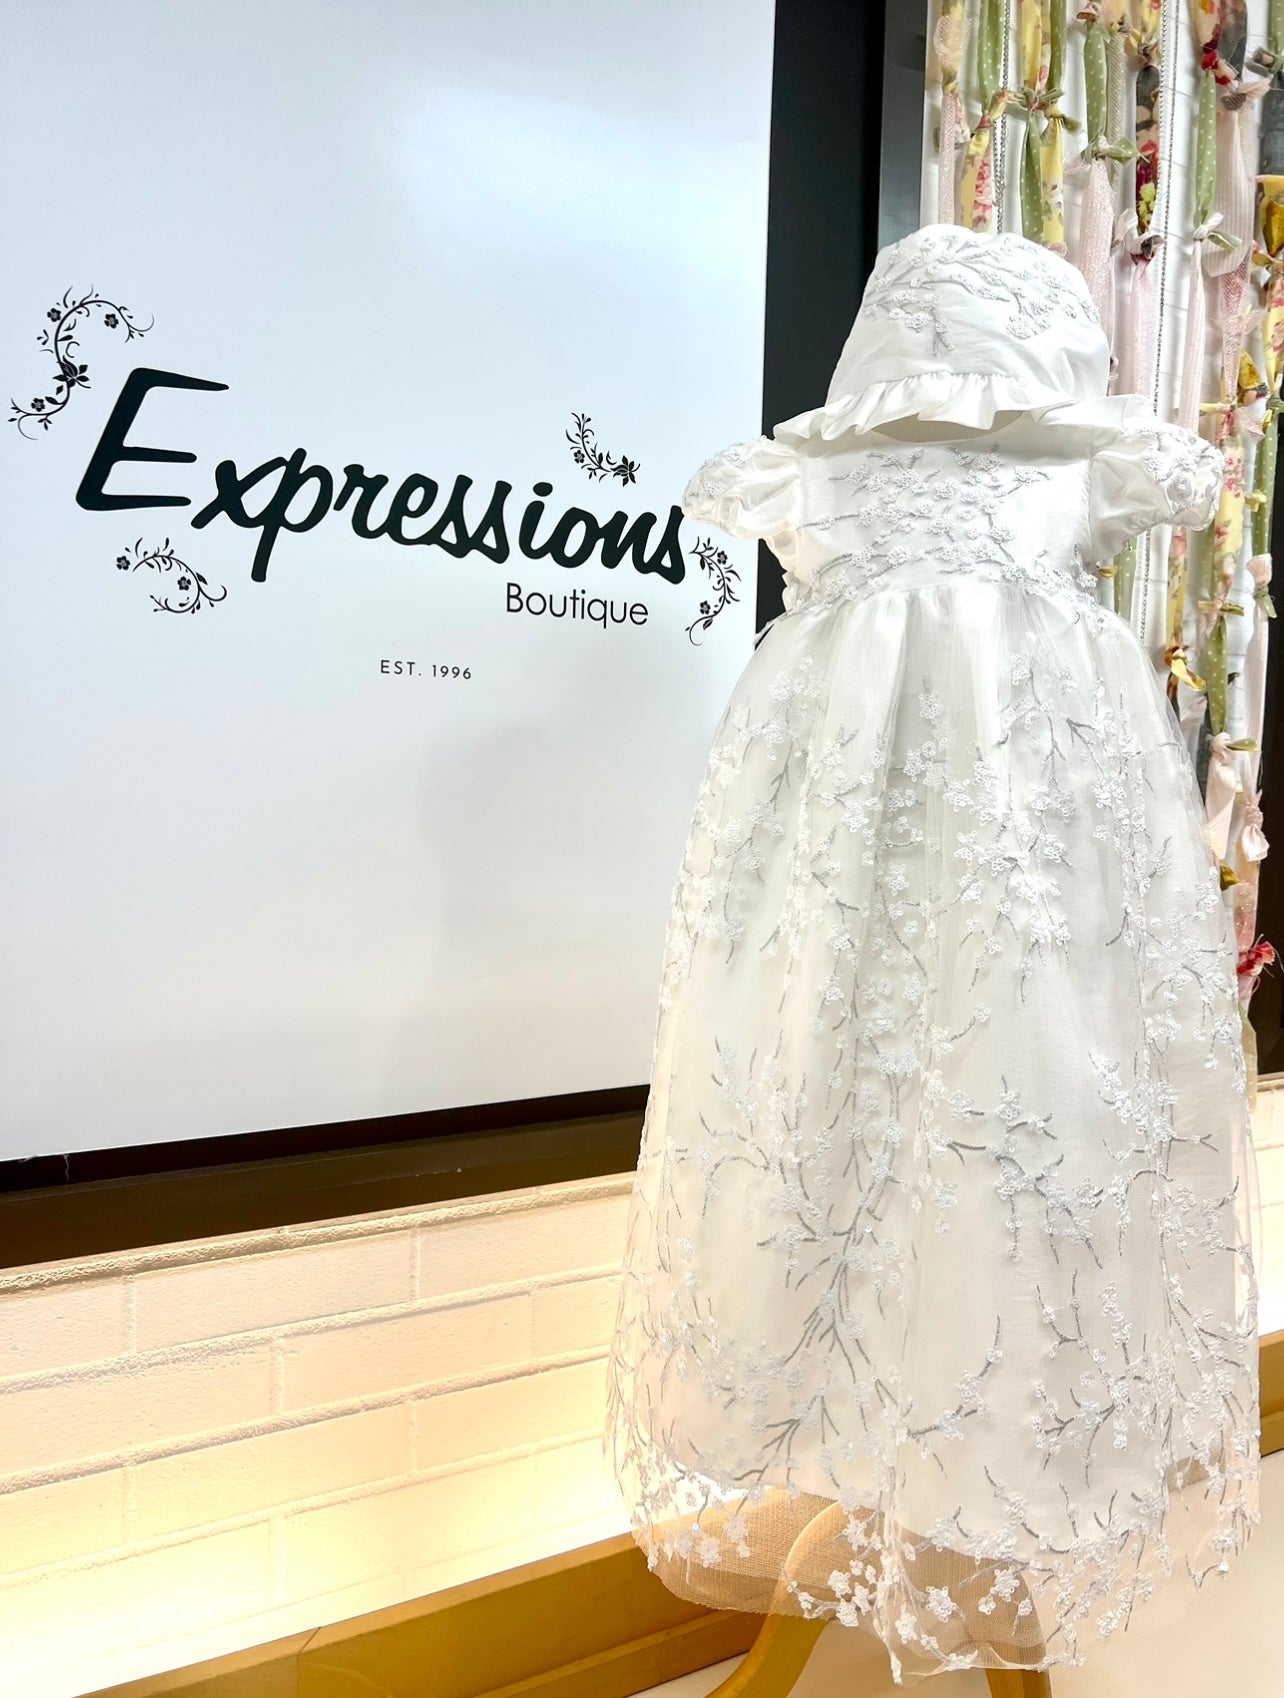 Ivory & White Cherry Blossom dress